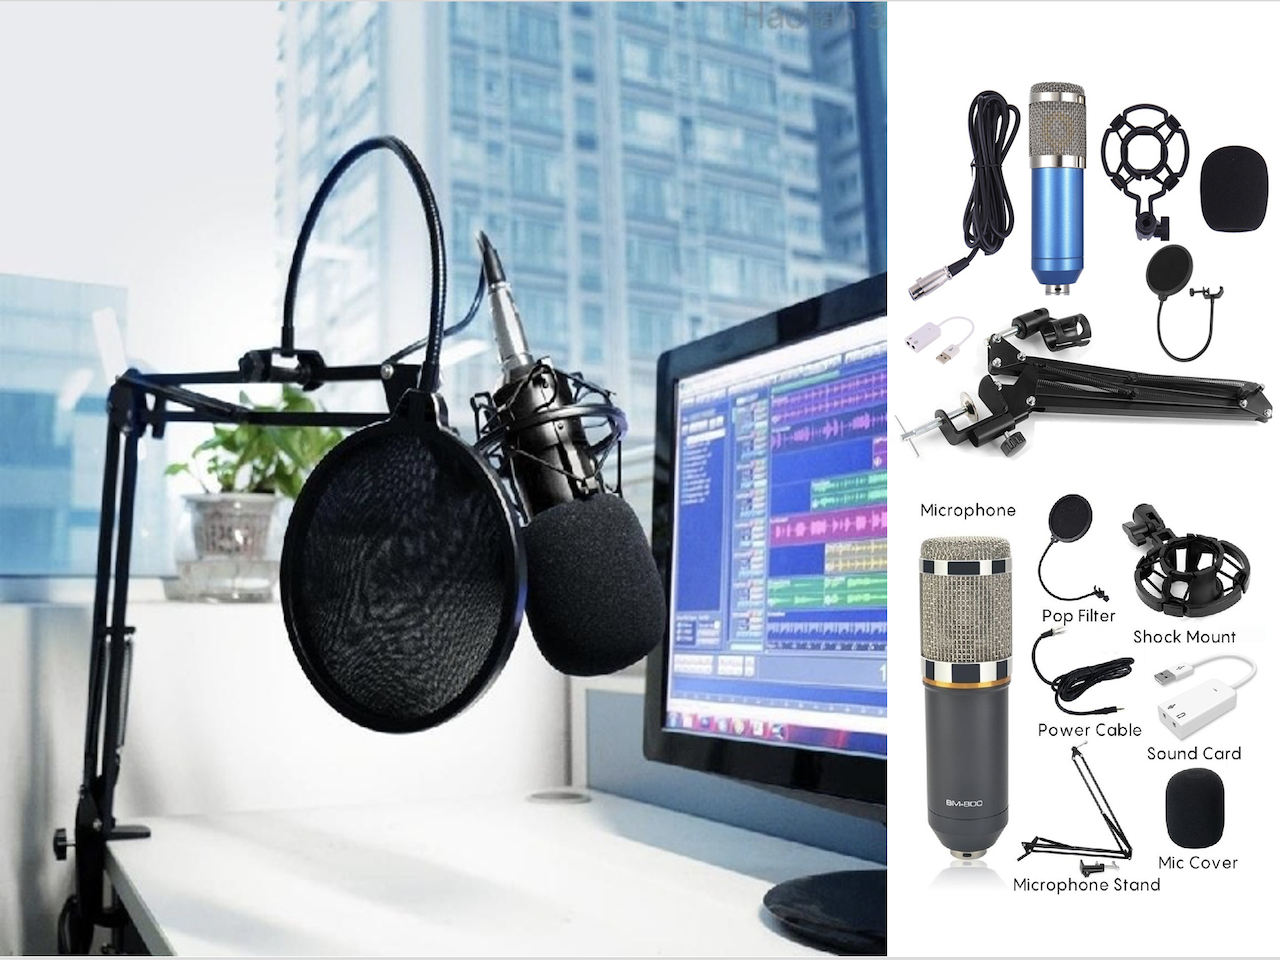 Microfono profesional BM800 con brazo shock para radio /